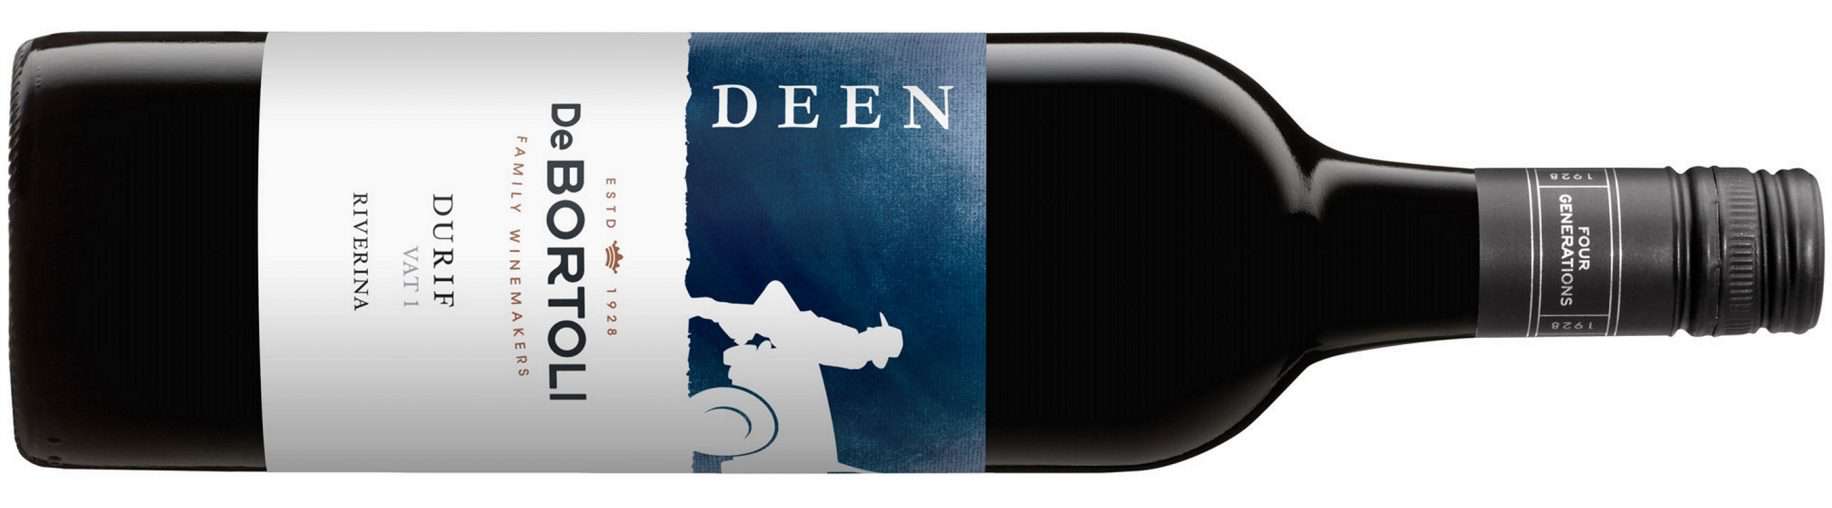 Wine of the Week: Deen Vat 1 Durif 2016